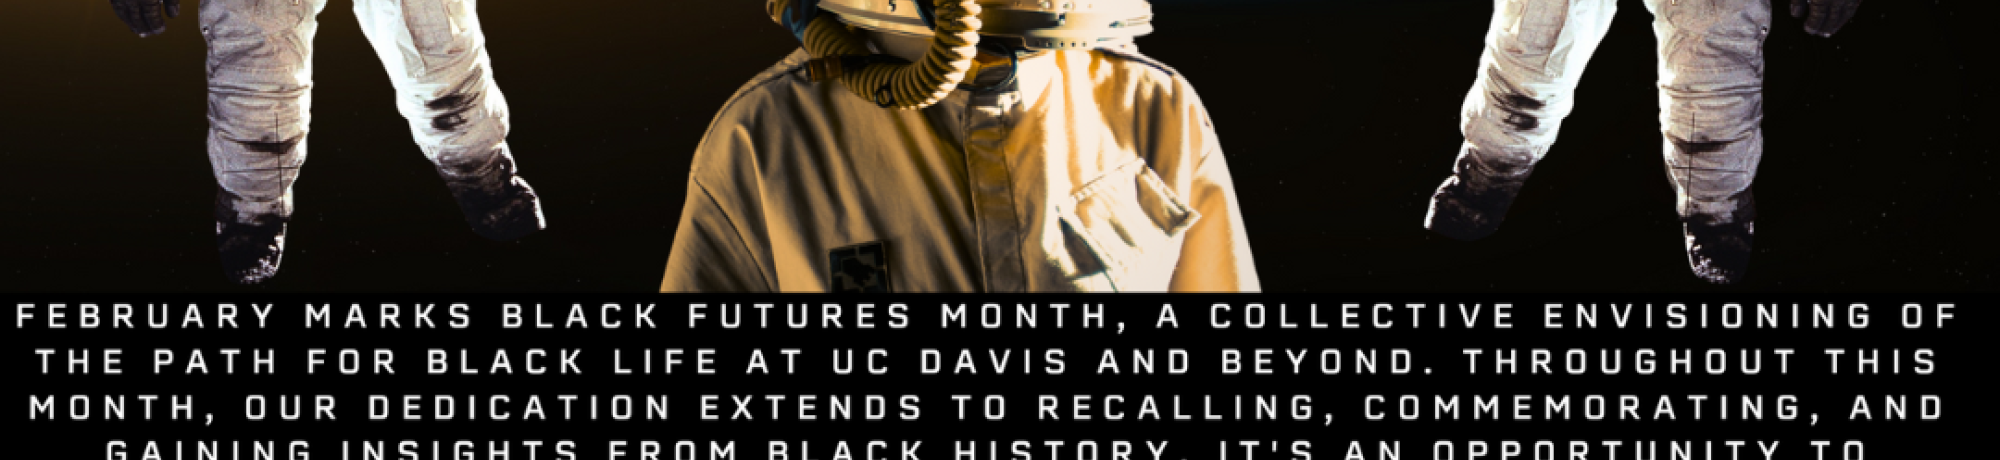 Black Futures Month at UC Davis